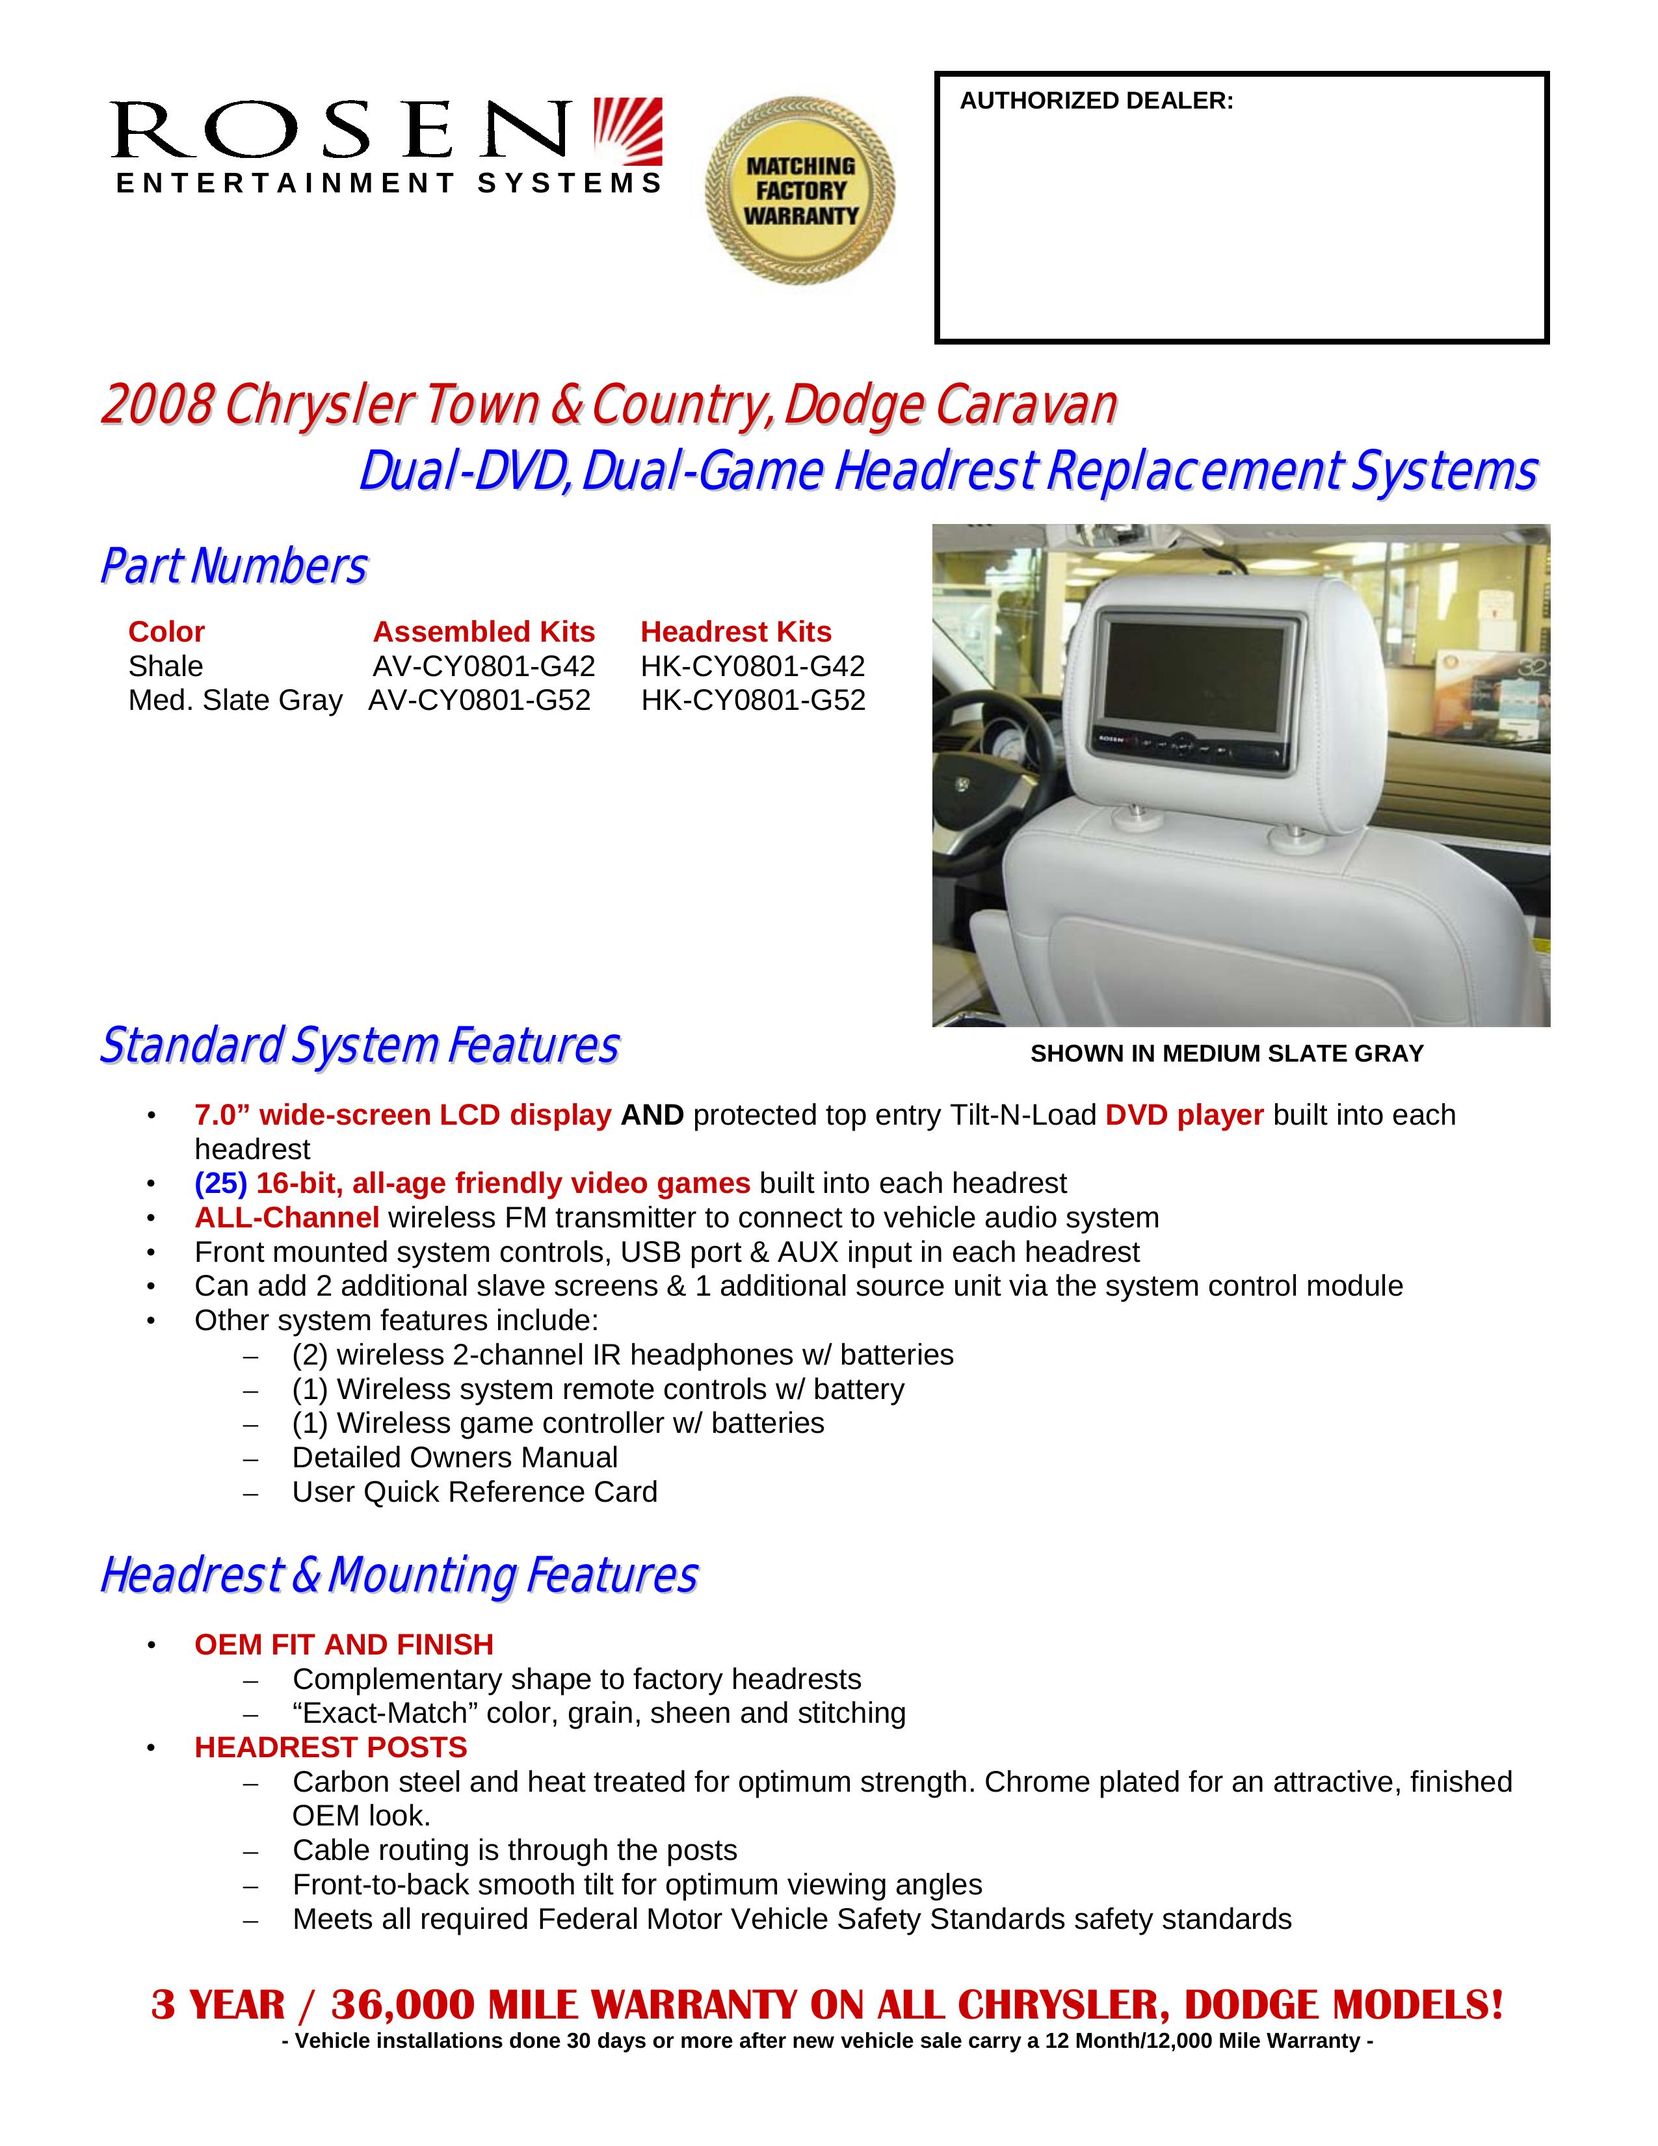 Rosen Entertainment Systems AV-CY0801-G52 Car Video System User Manual